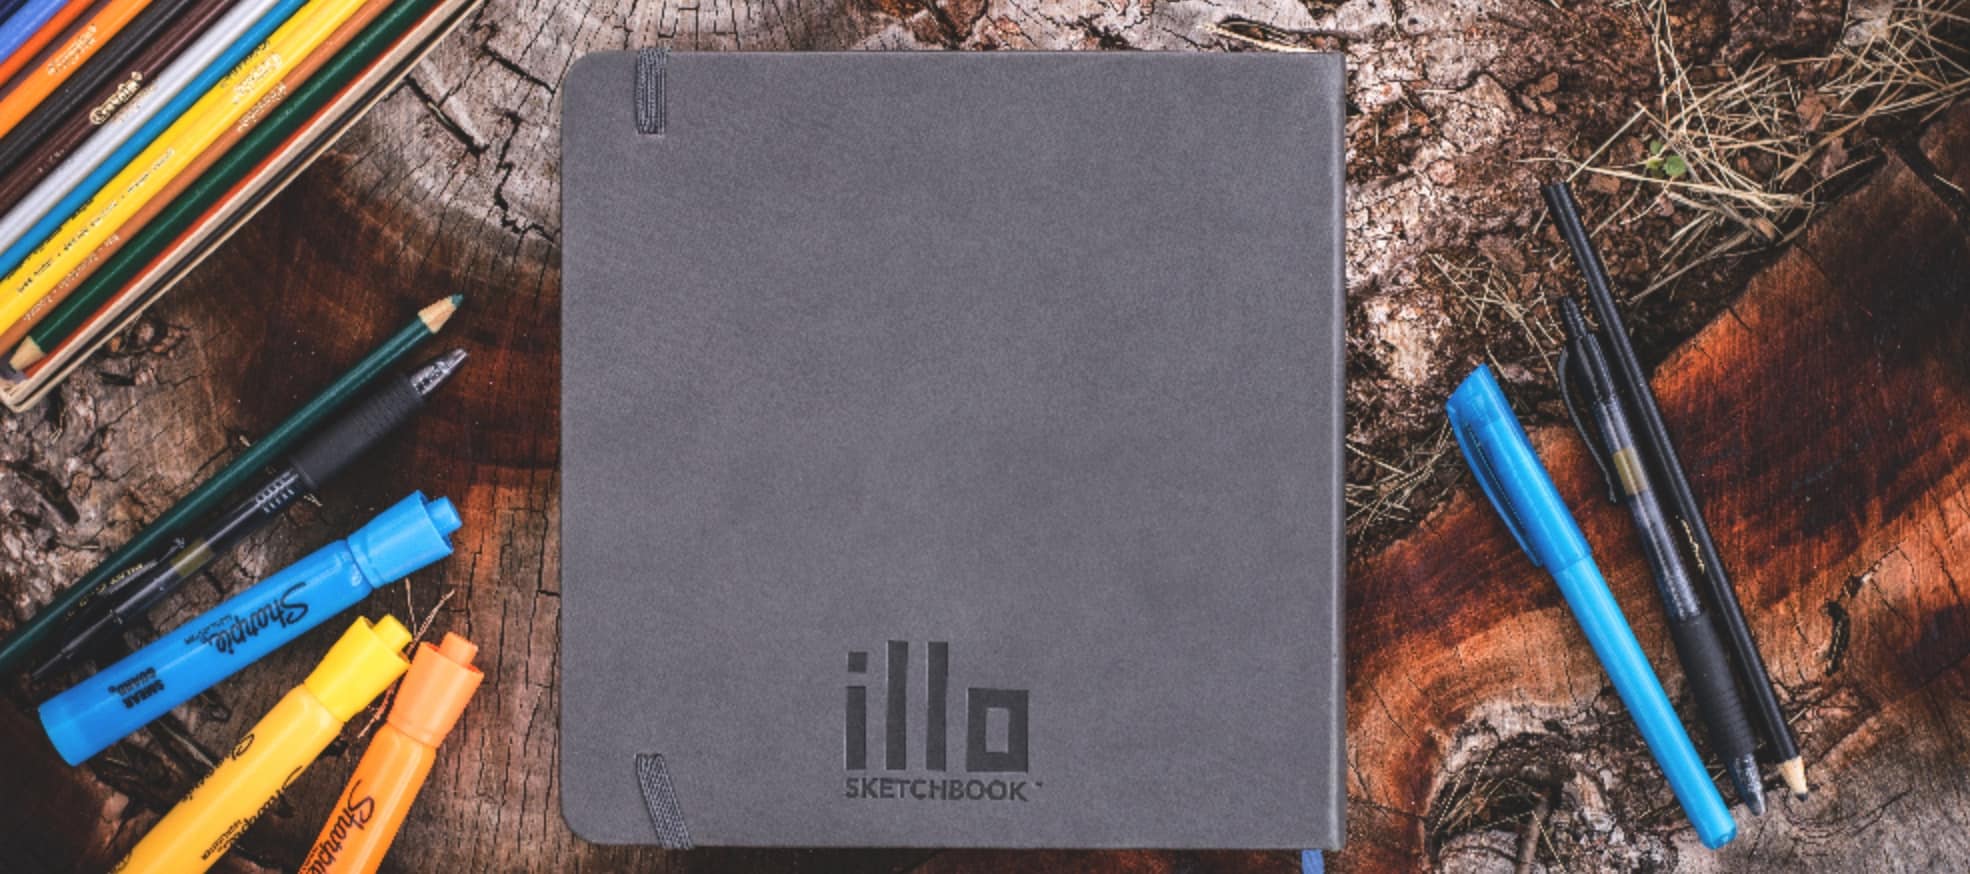 illo sketchbook spreads｜TikTok Search